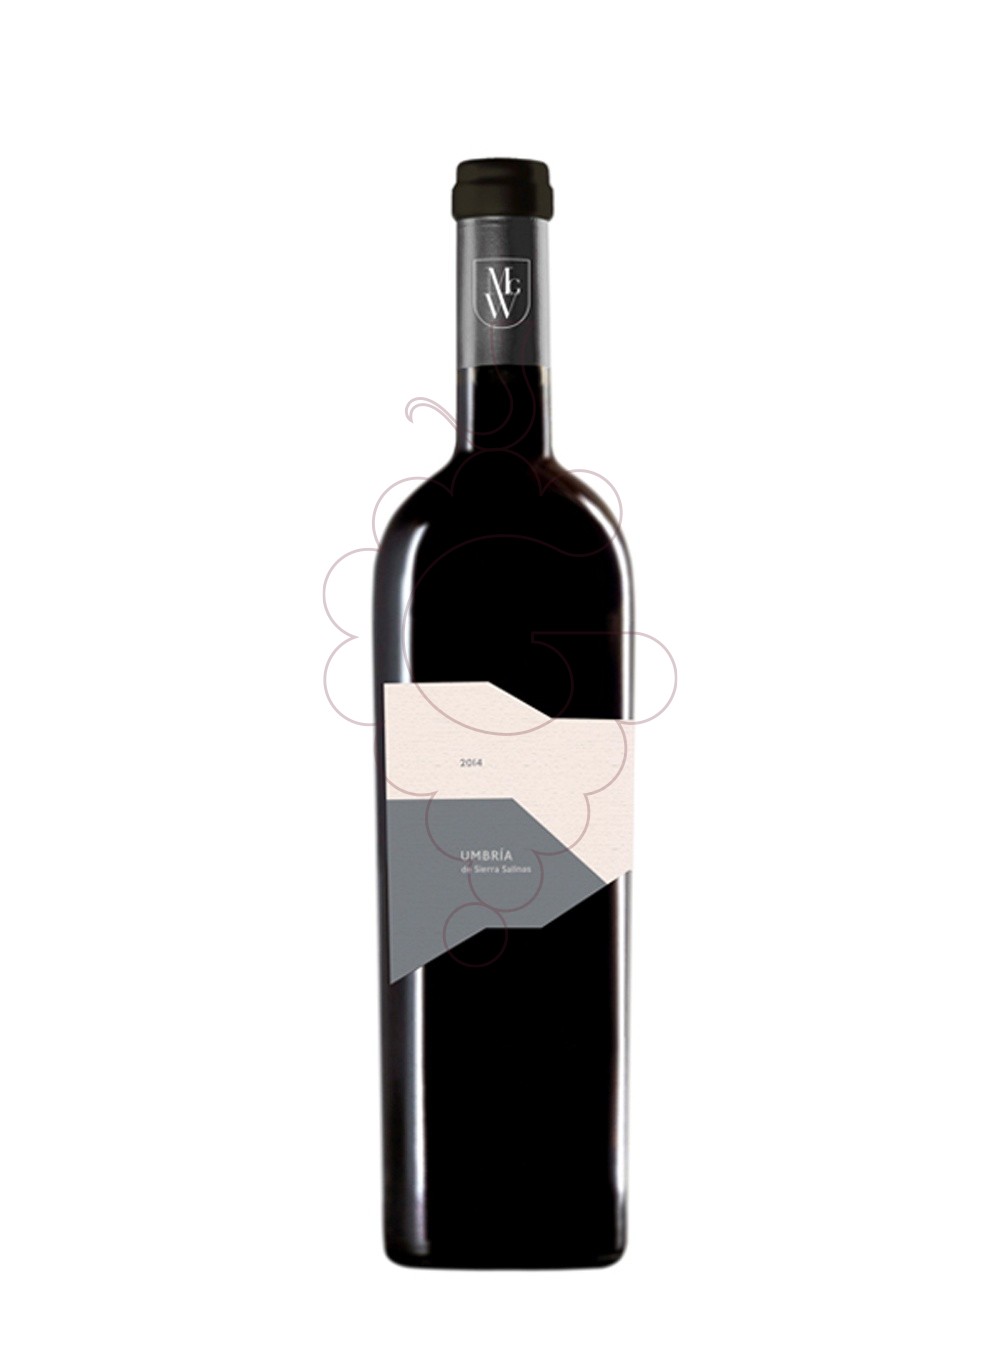 Photo Umbria de sierra salinas 2014 vin rouge